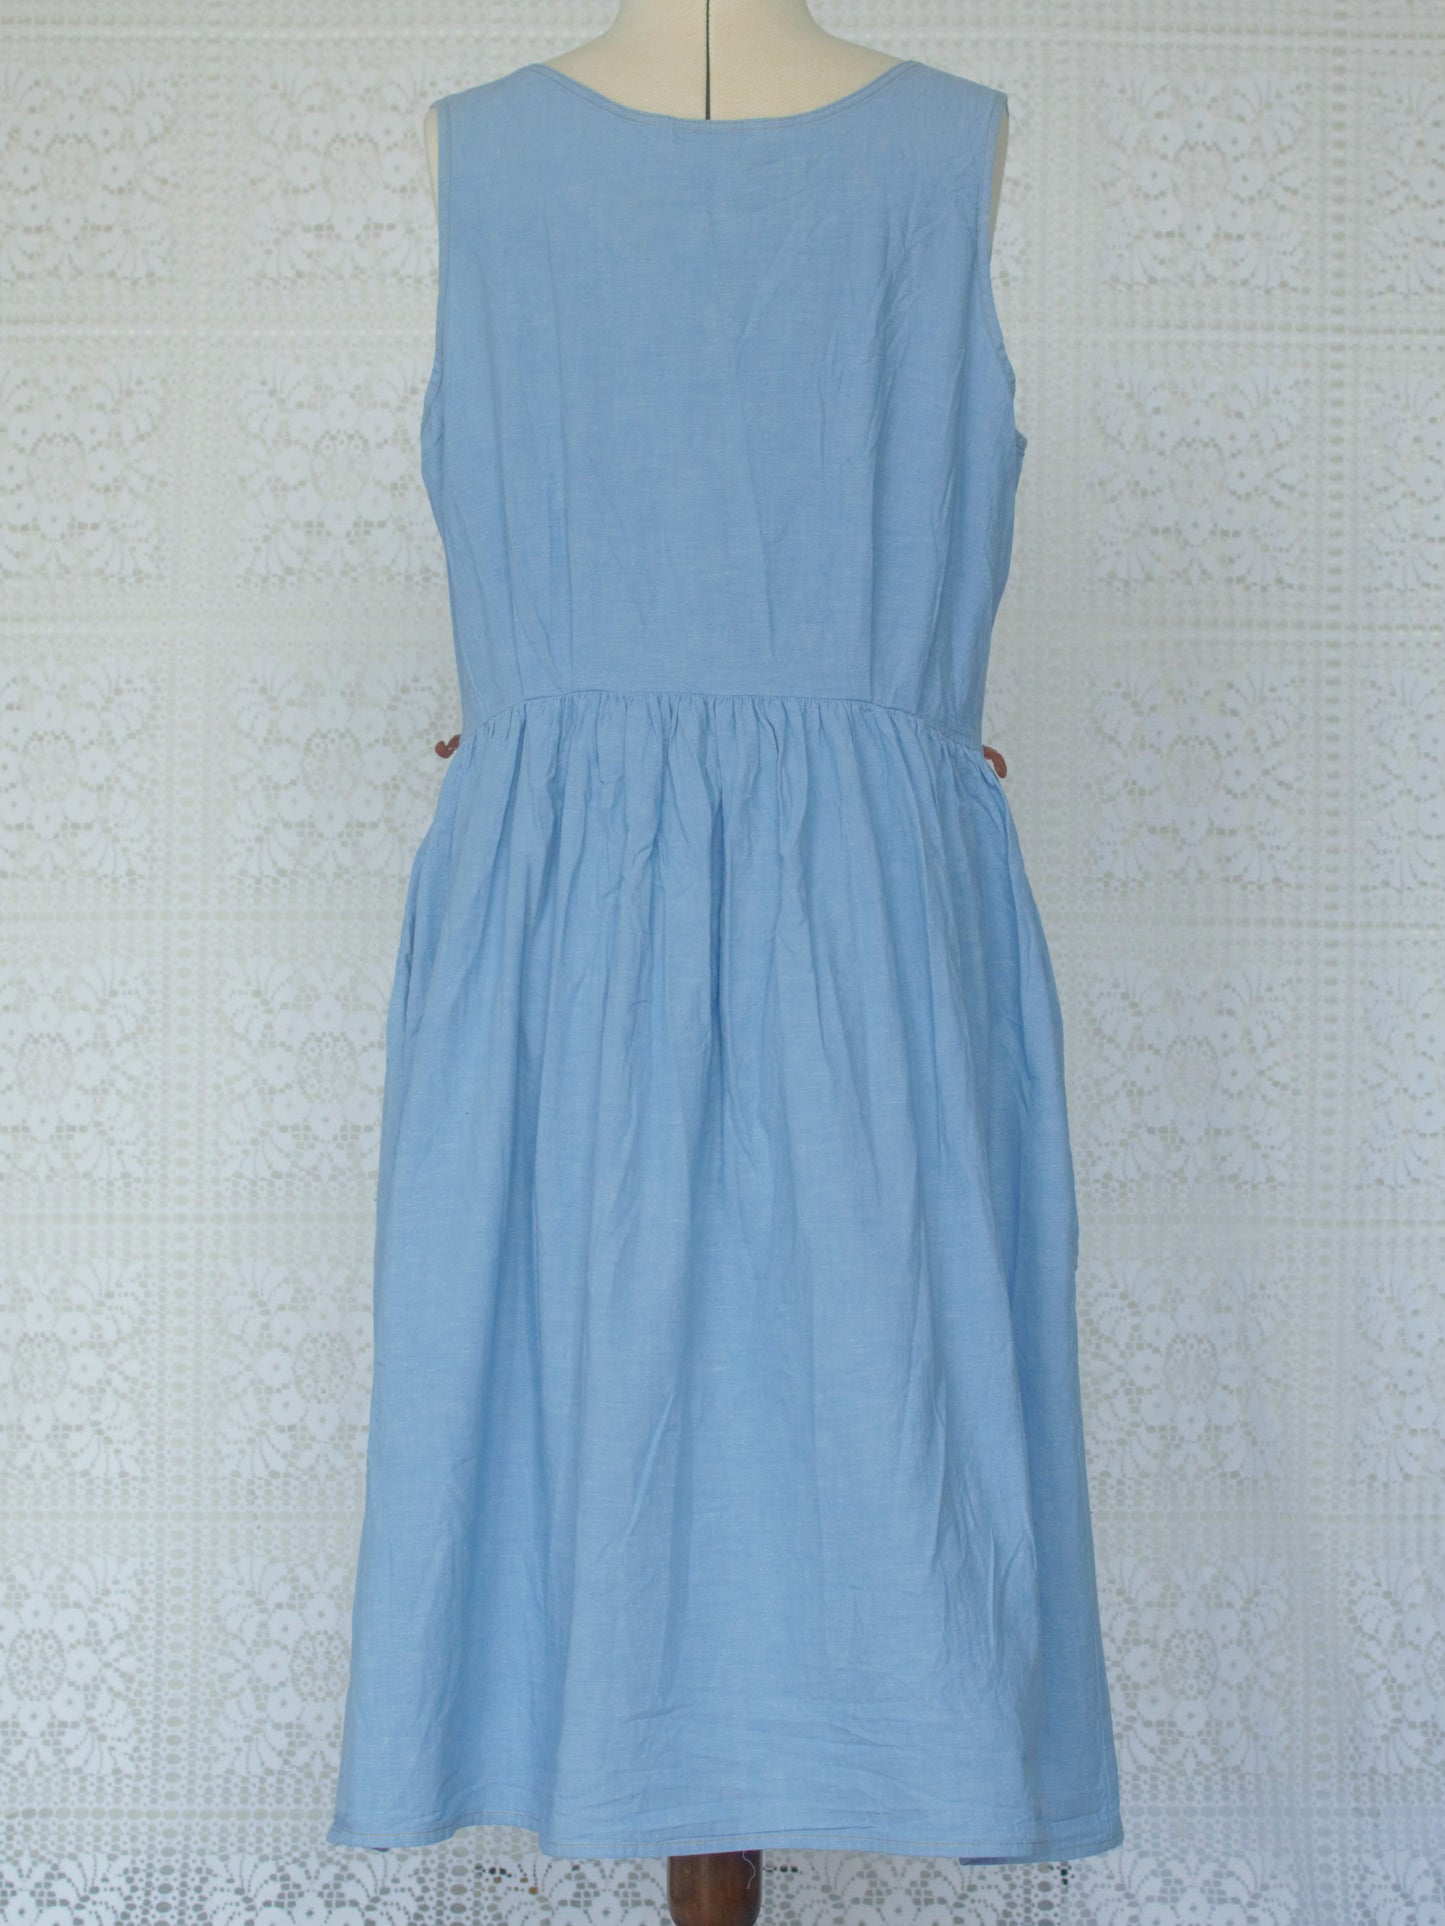 1990s St Michael light blue chambray cotton sleeveless smock dress